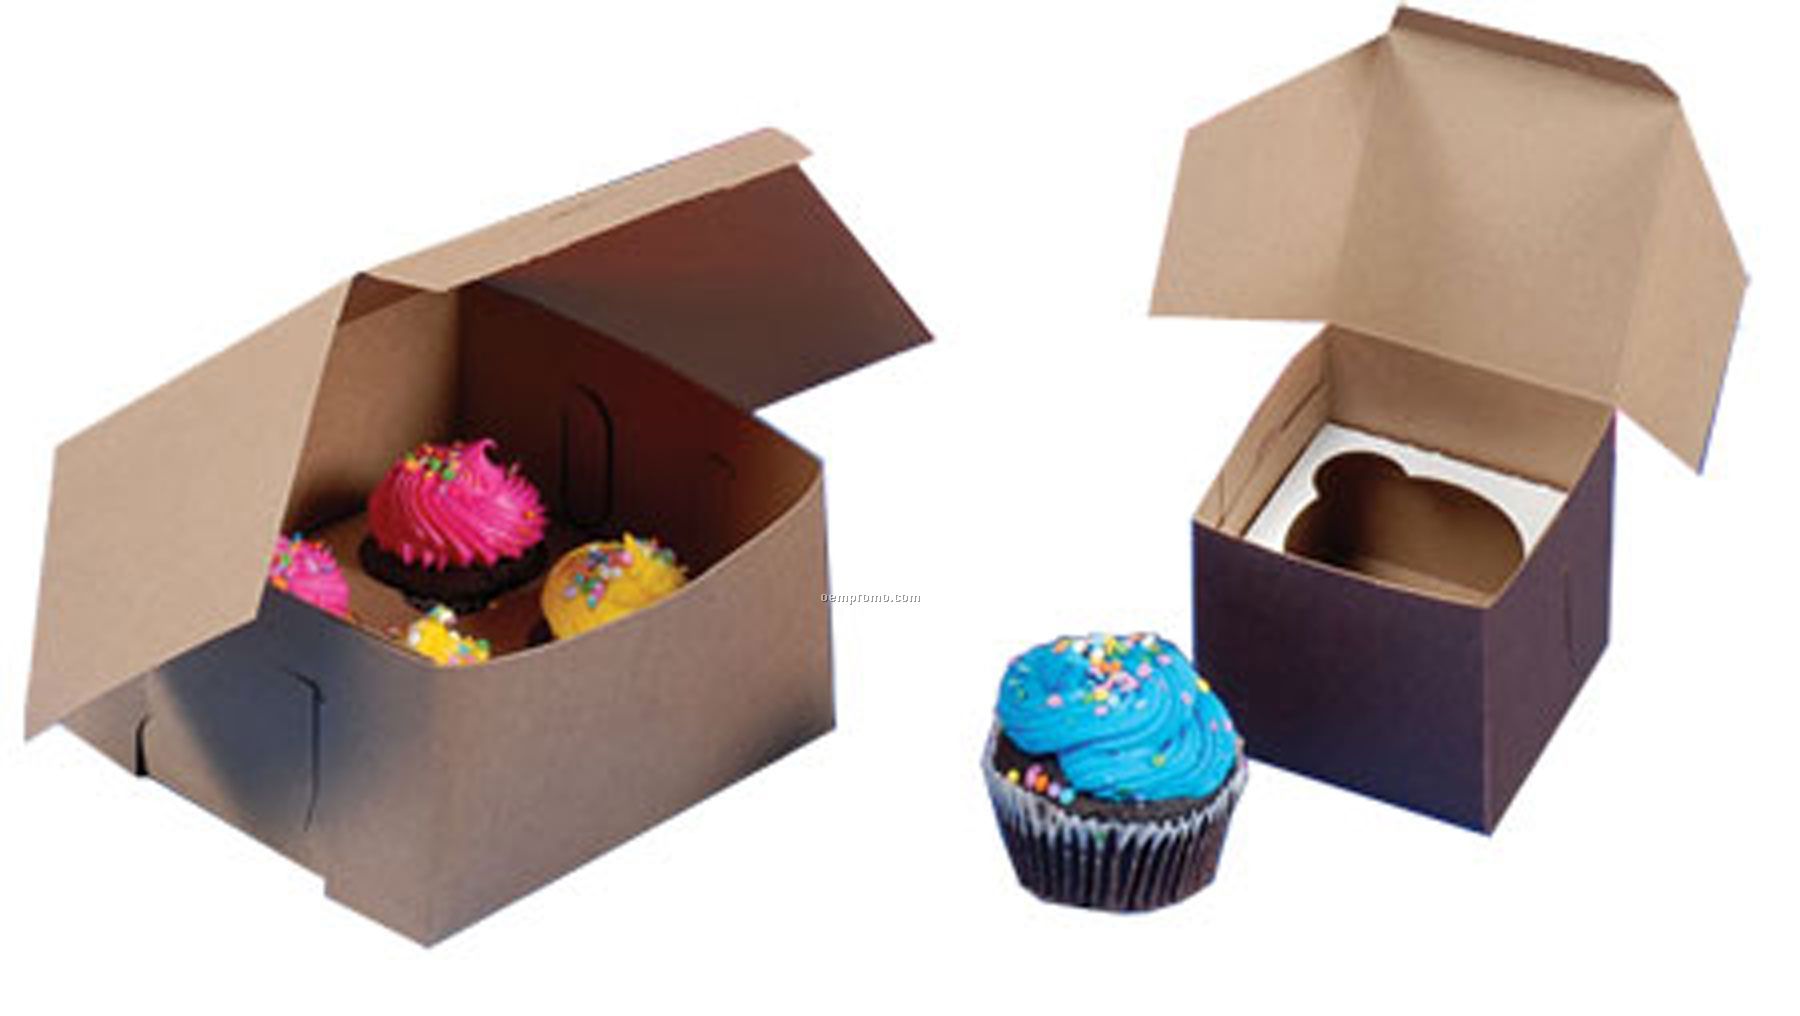 2 Reg/Jumbo Cupcake Boxes (8"X4"X4")